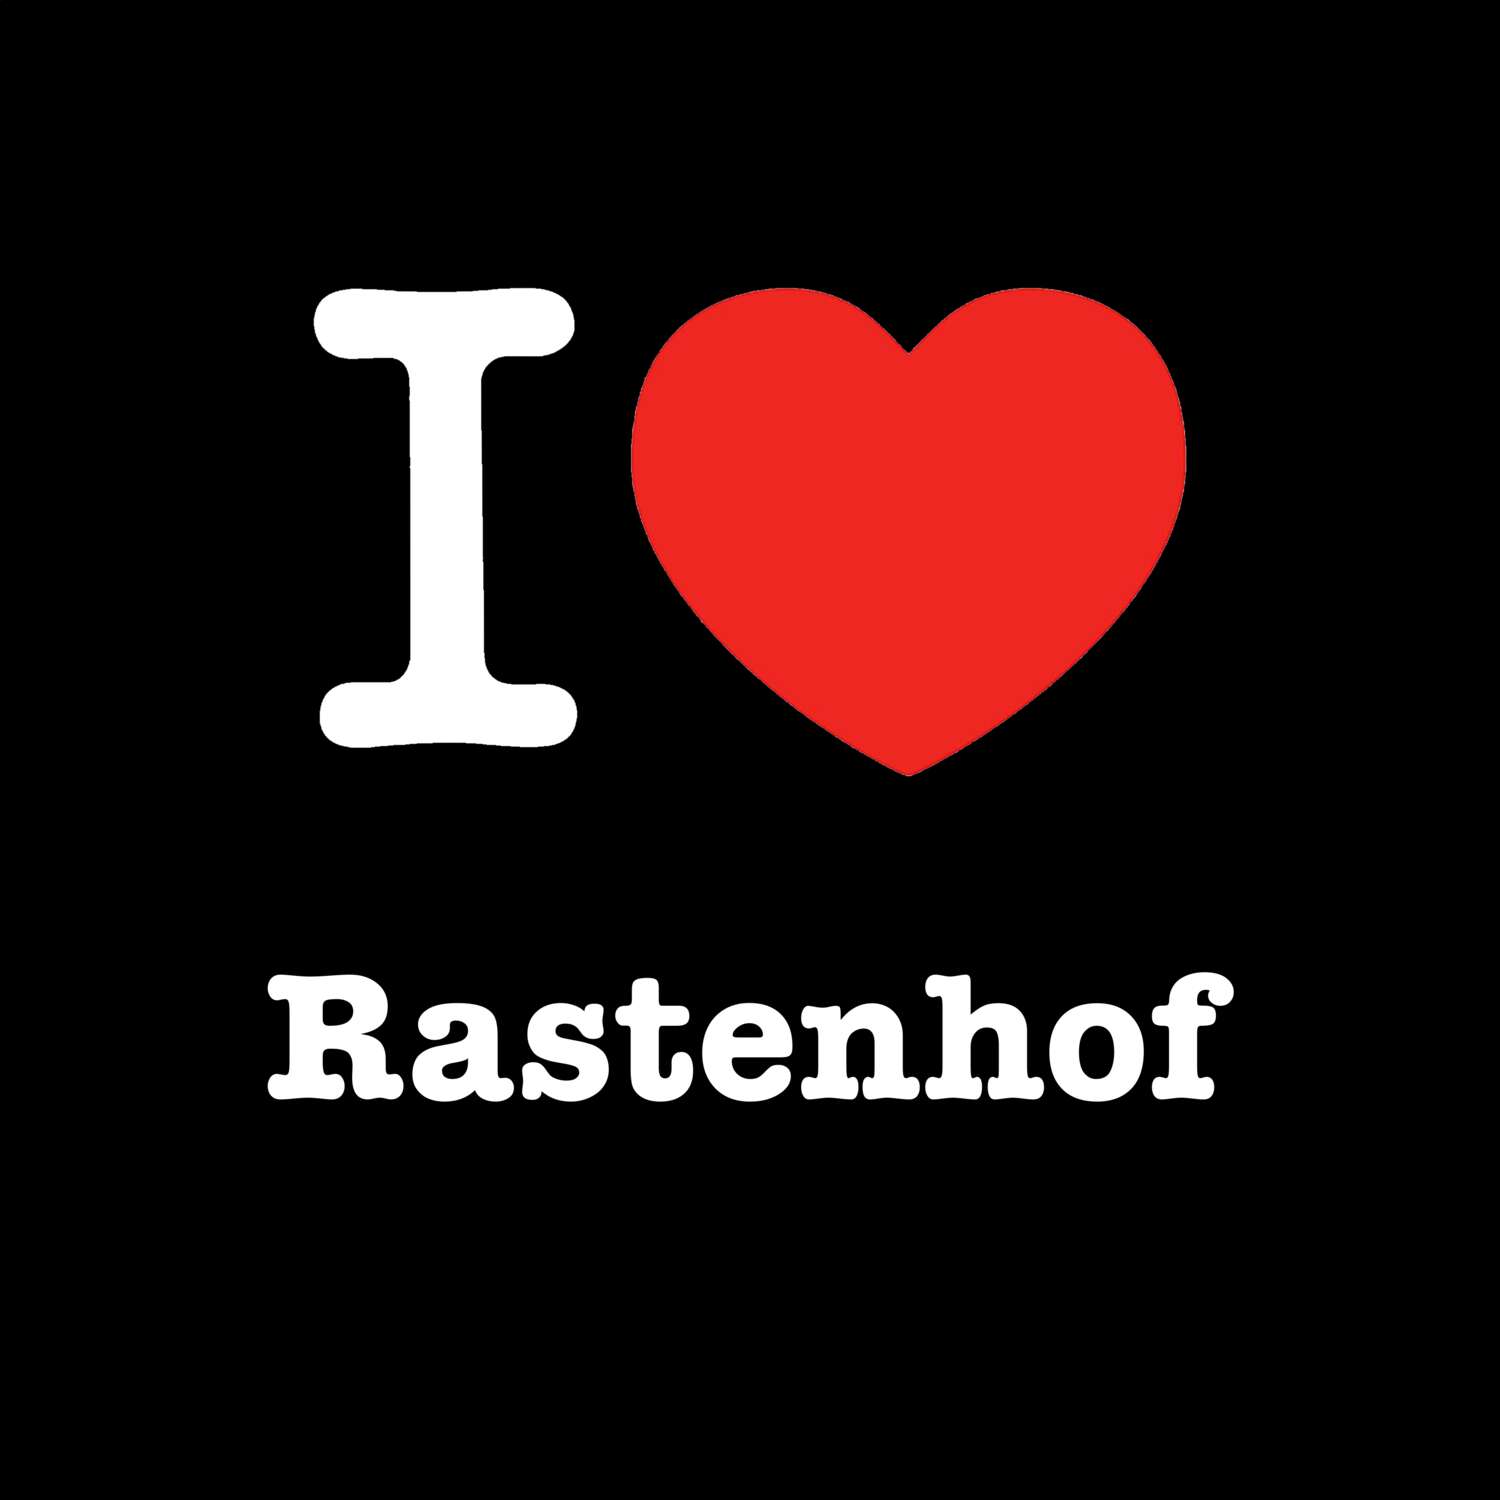 Rastenhof T-Shirt »I love«